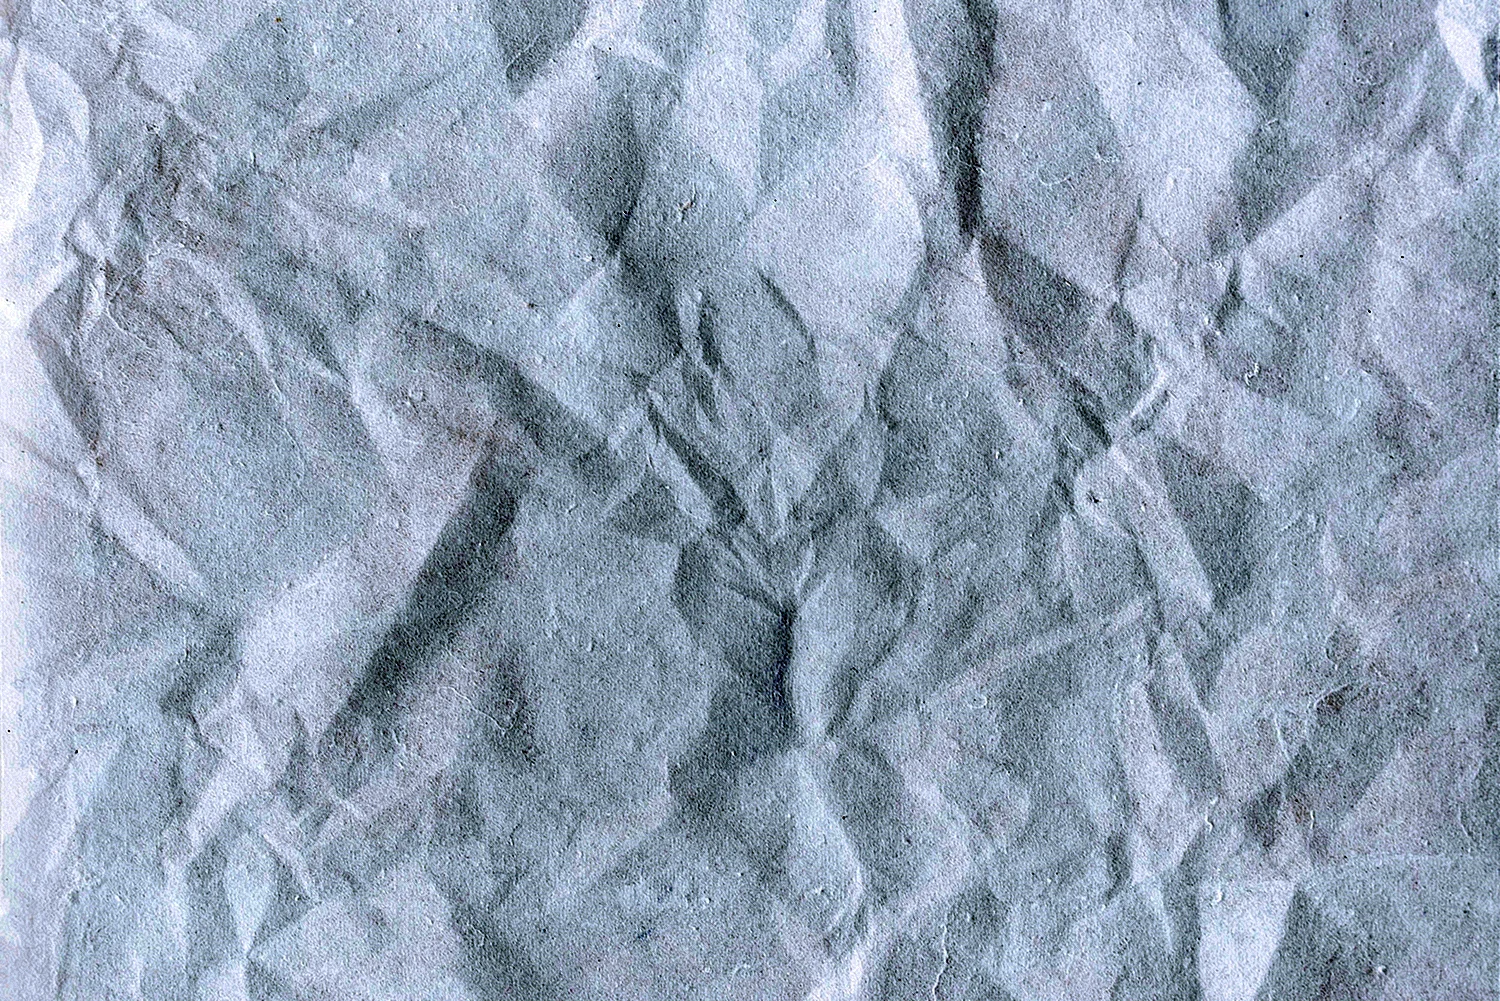 Белая бумага текстура